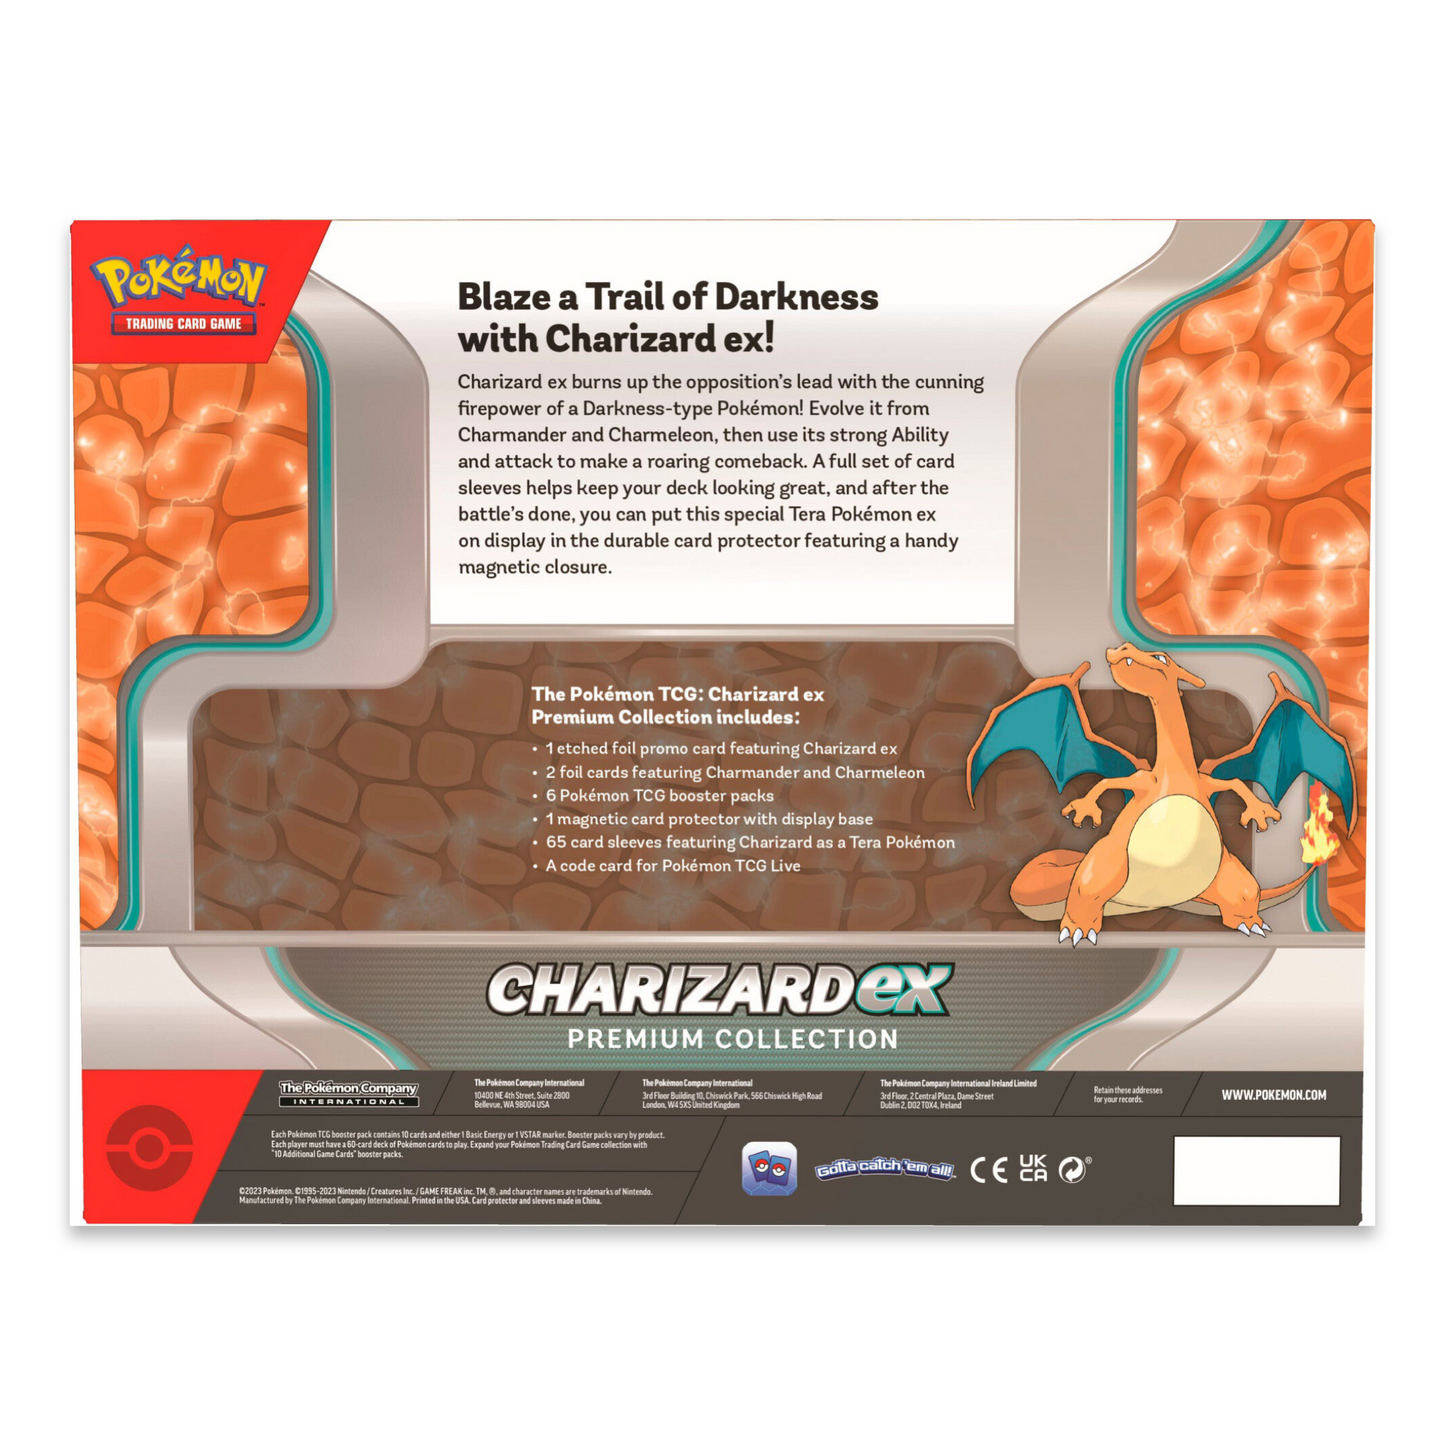 PRE-ORDER: Pokémon Charizard EX Premium Collection